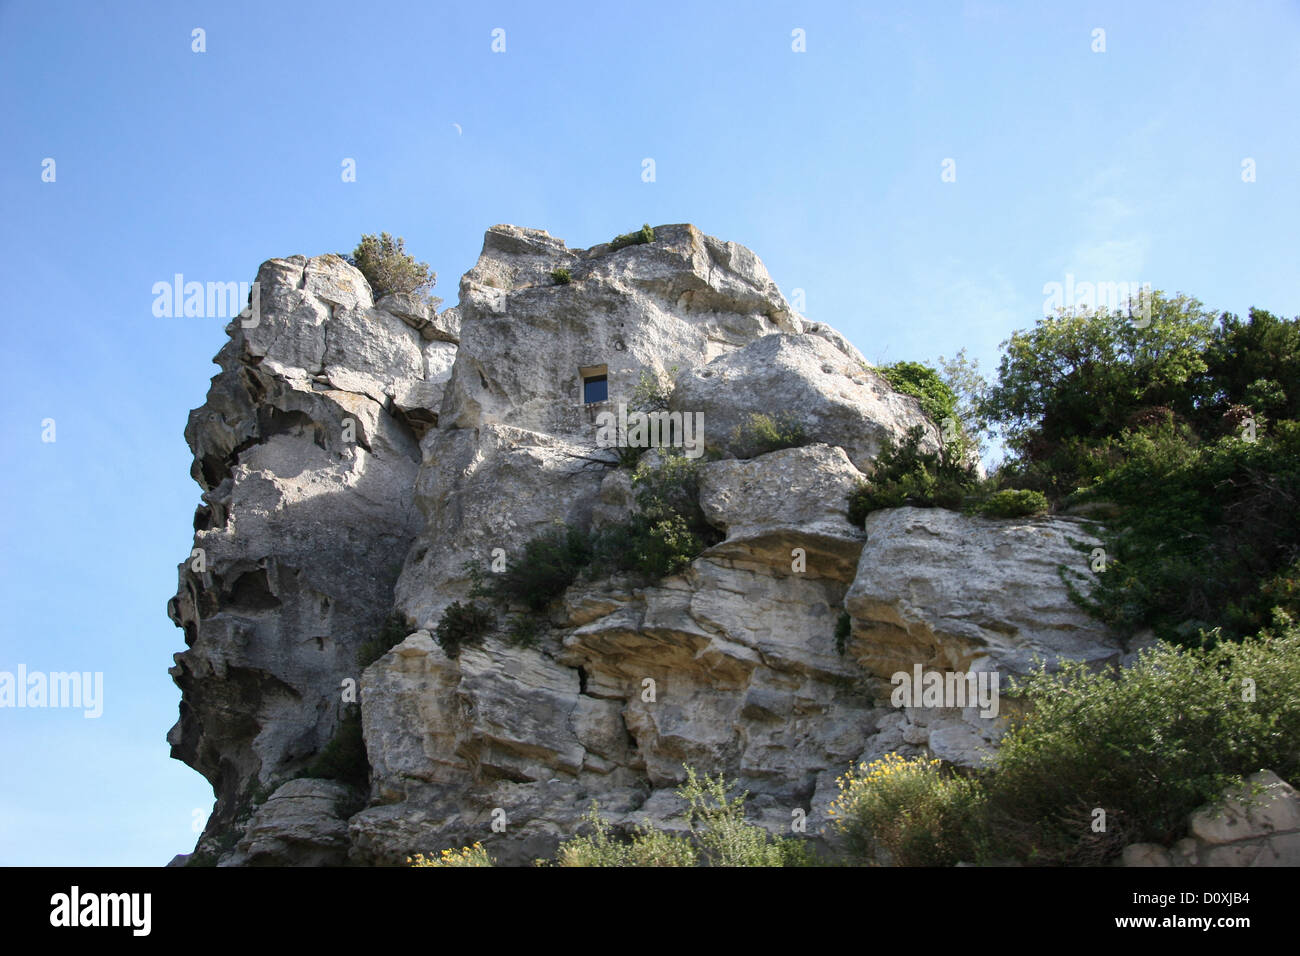 France, Europe, Provence, Les Baux, Alpilles, stones, brusquely, cliff formation, cliff, Stock Photo